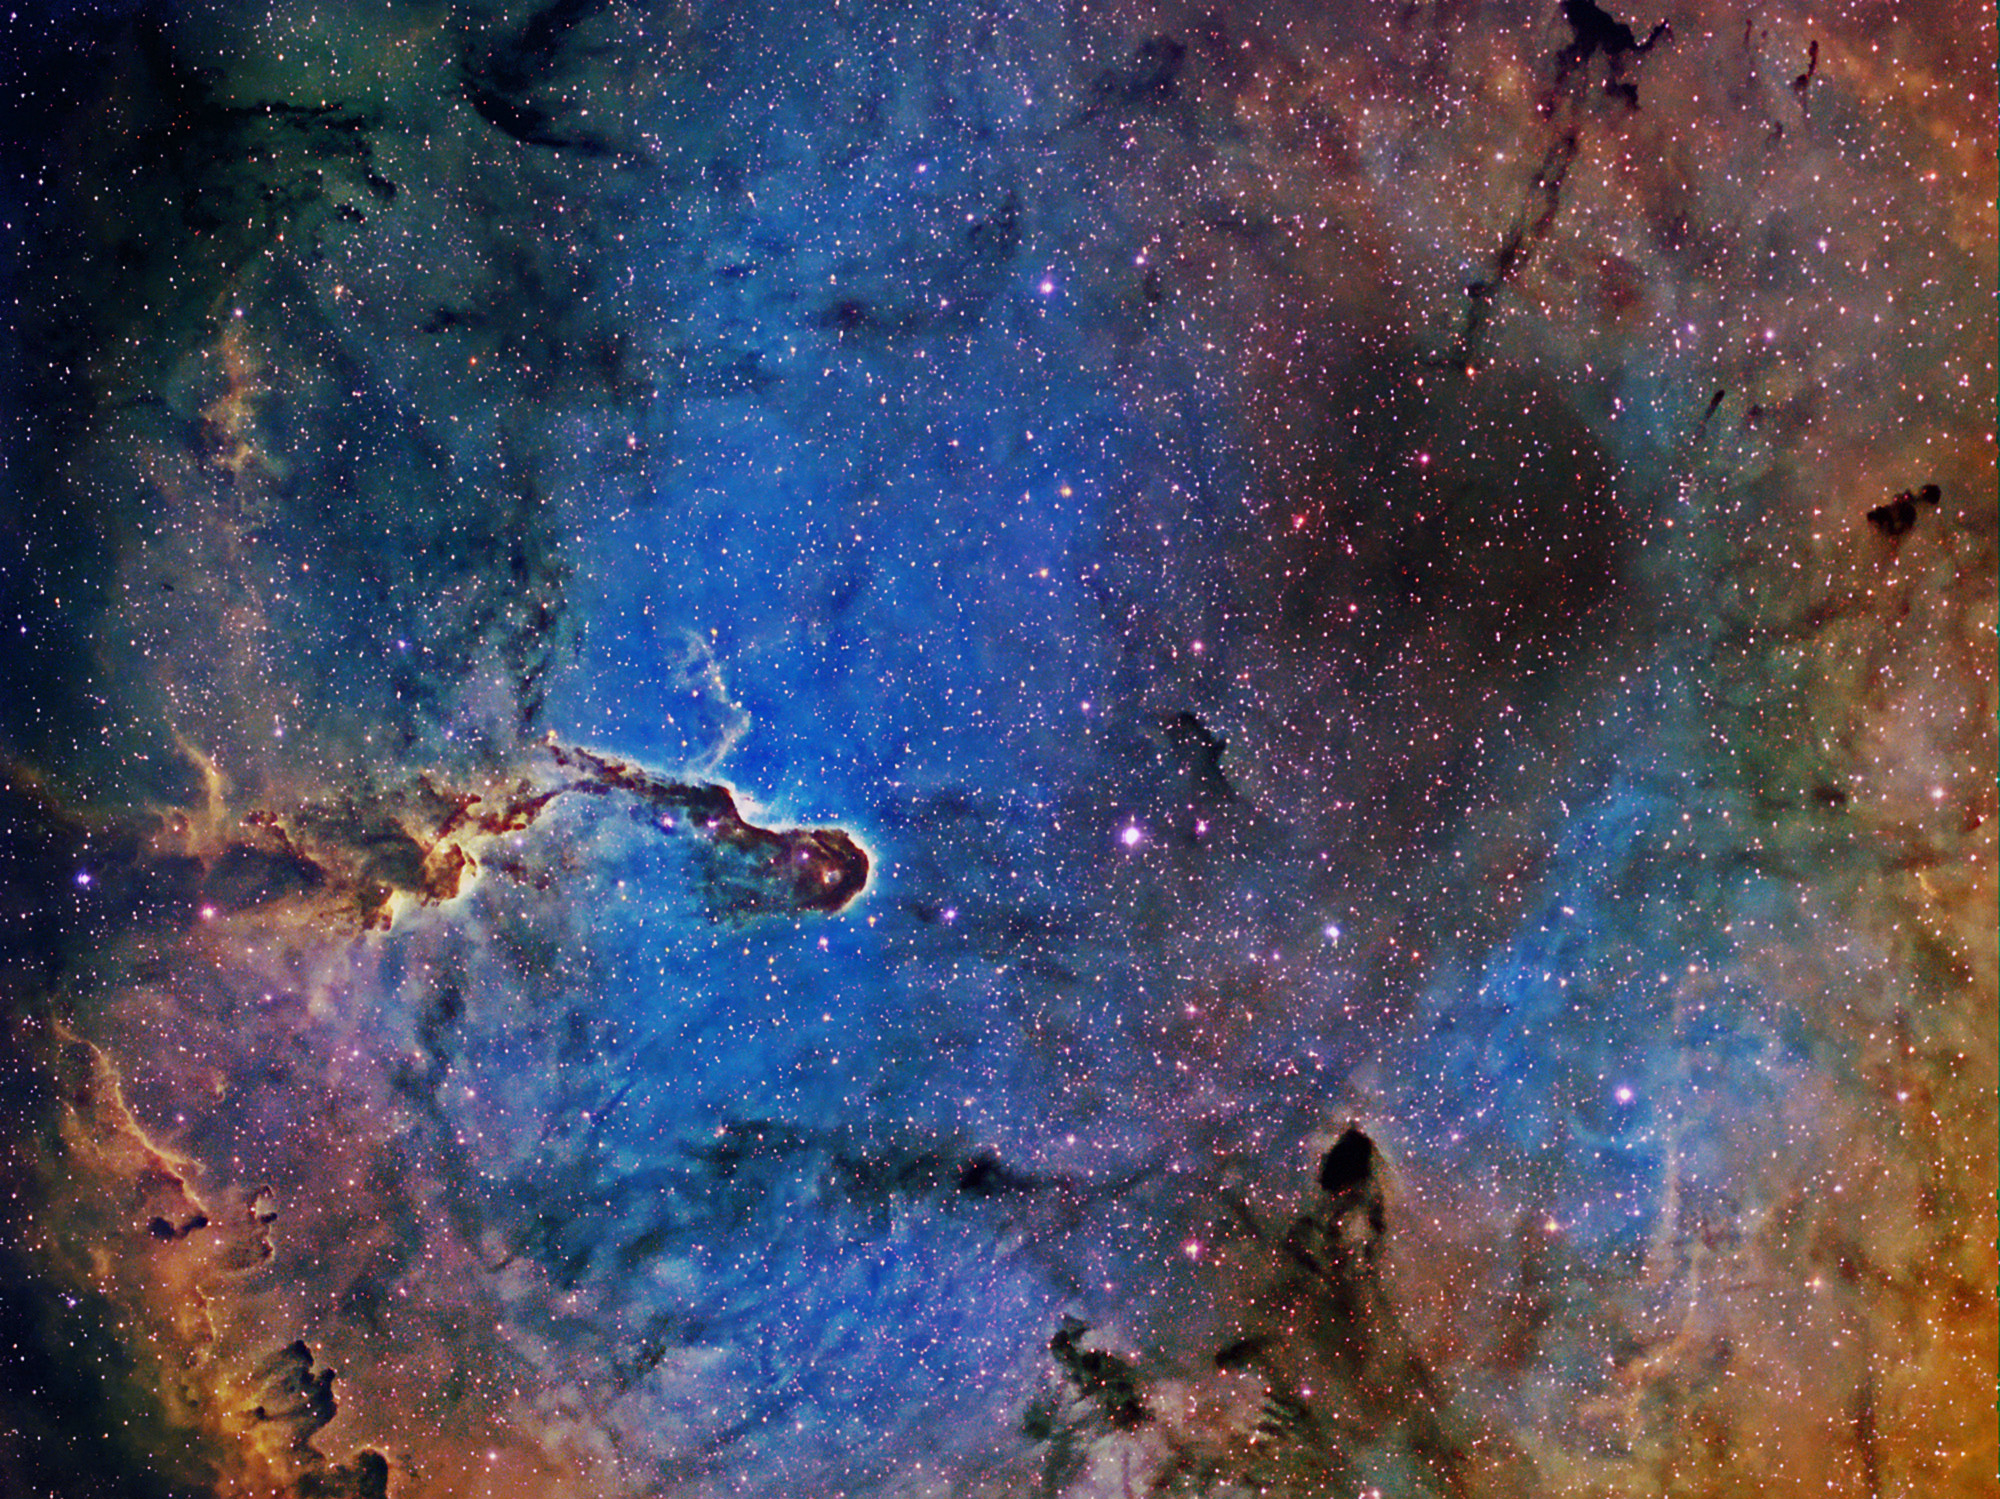 Elephant’s Trunk Nebula